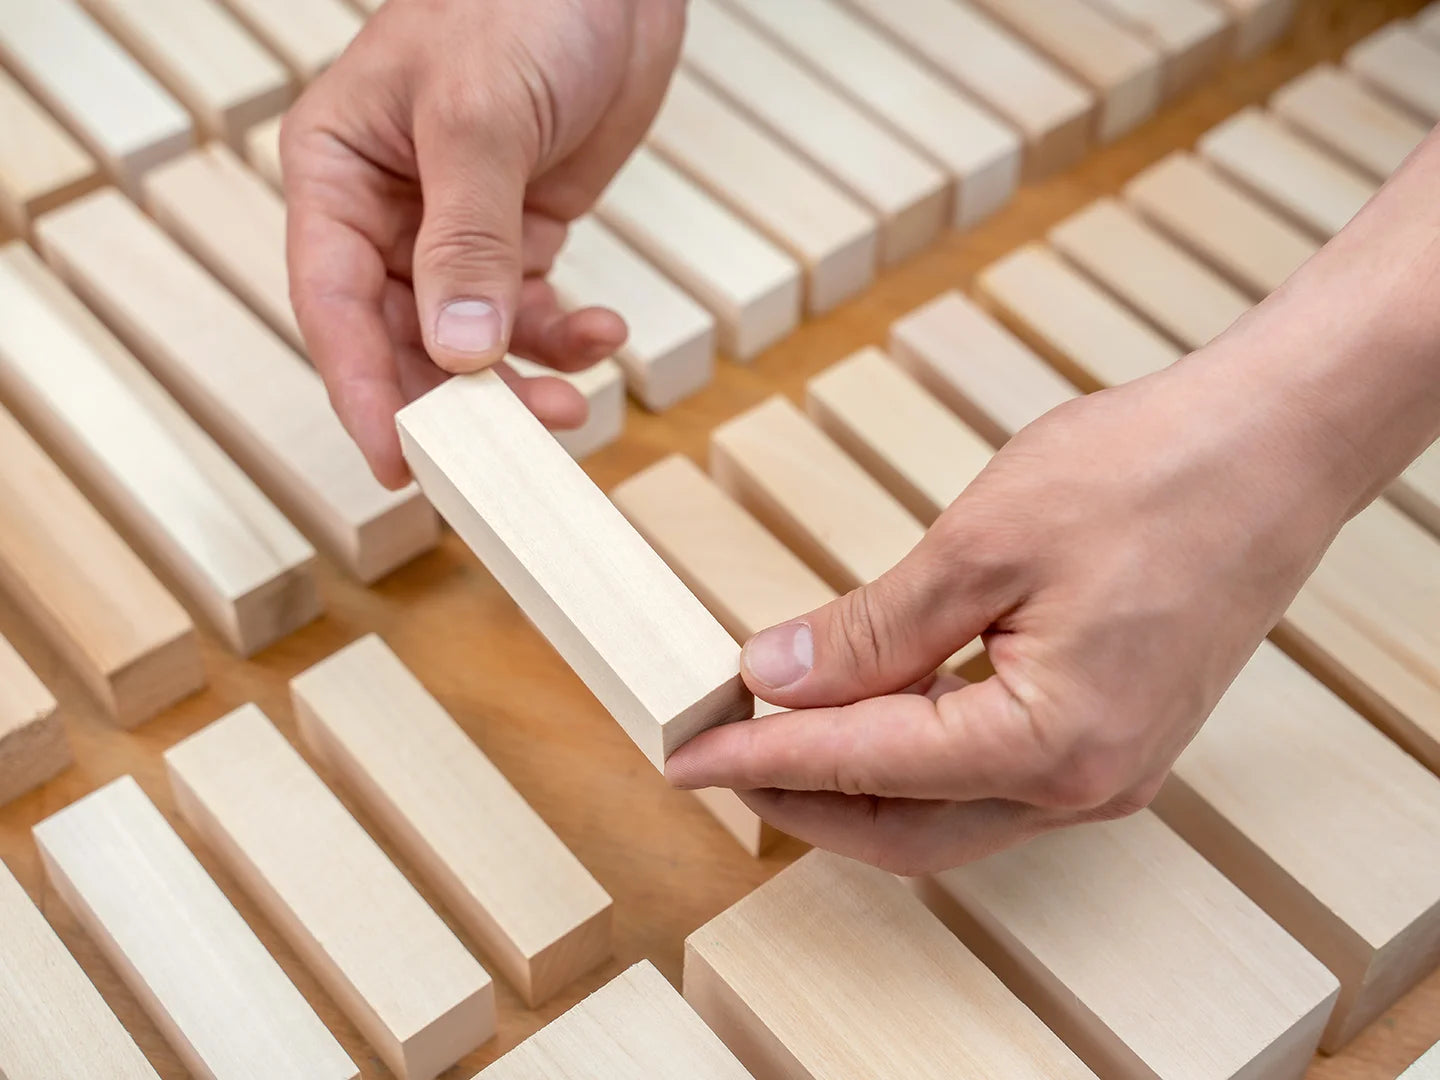 Basswood Premium Wood Carving Blocks Kit – Made in the USA – ASA